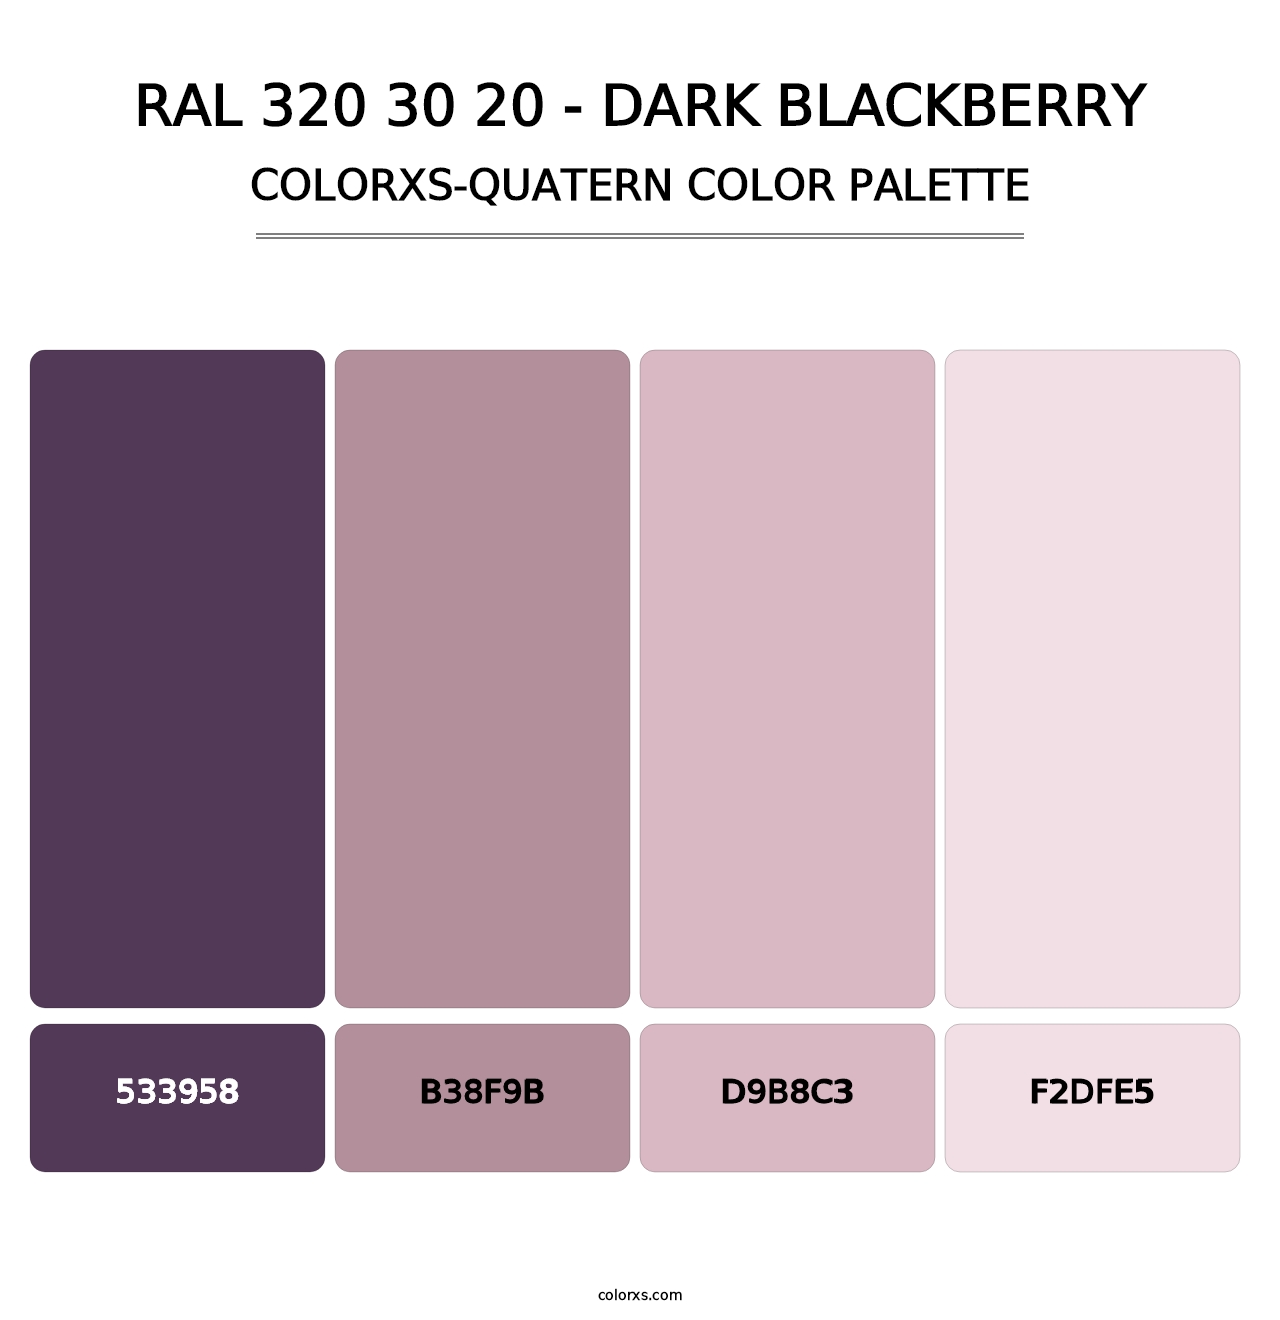 RAL 320 30 20 - Dark Blackberry - Colorxs Quatern Palette